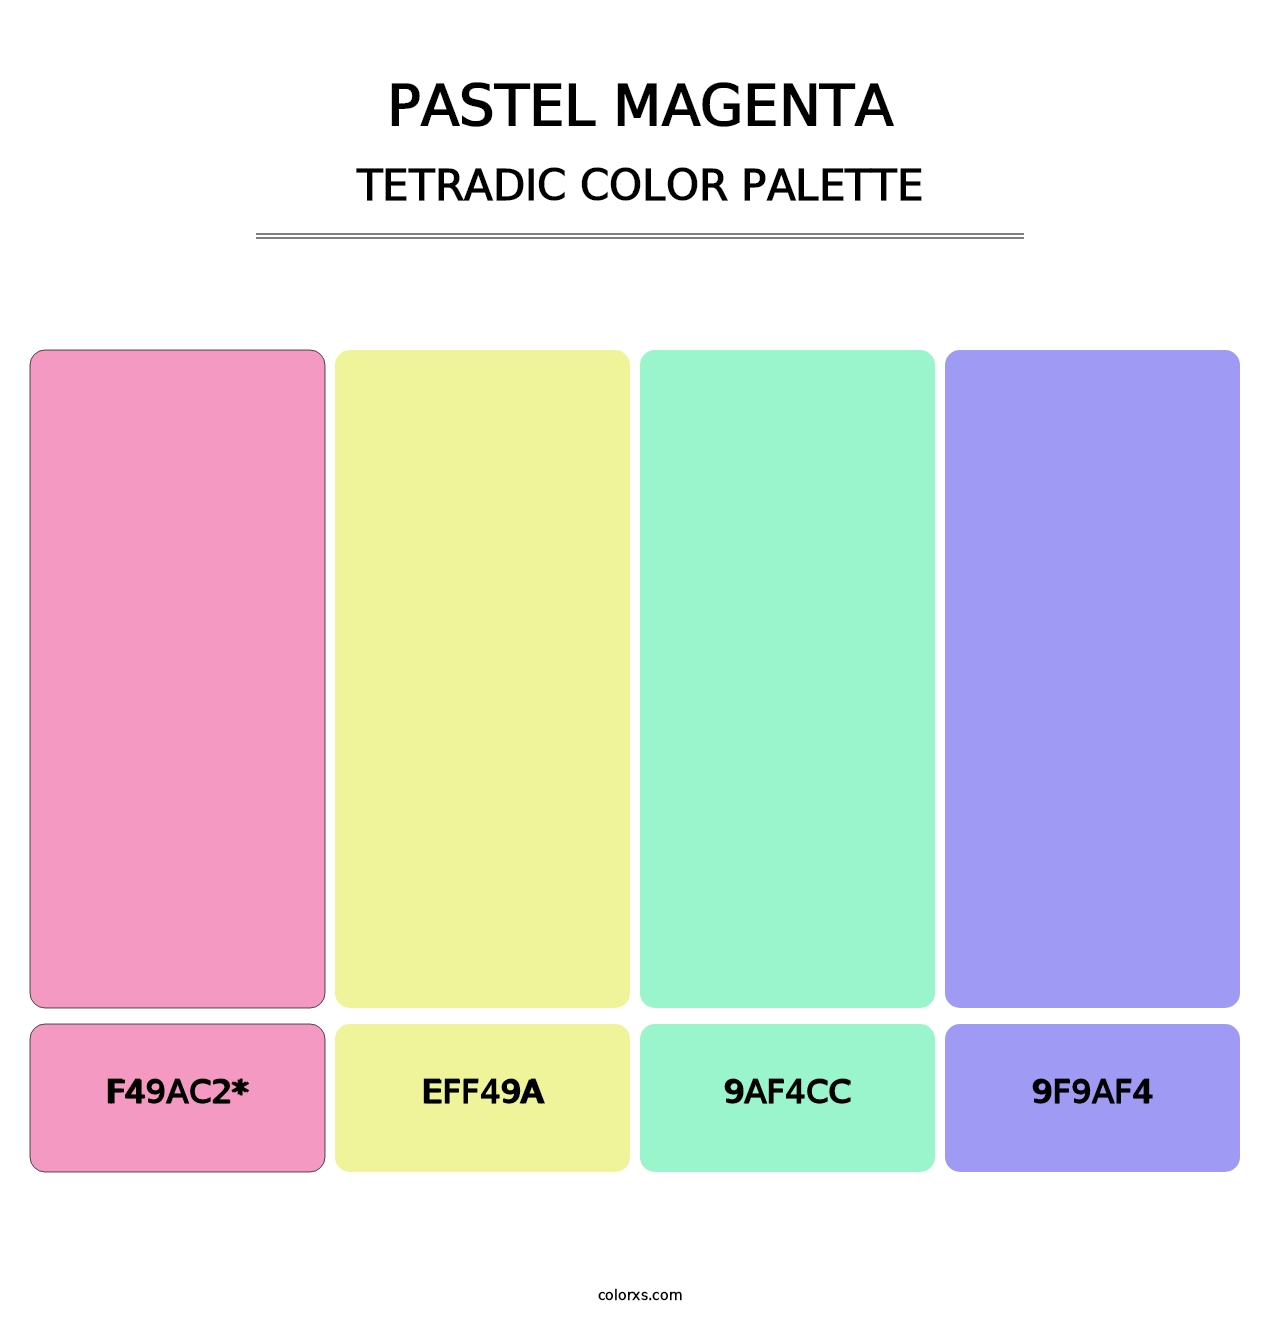 Pastel Magenta - Tetradic Color Palette